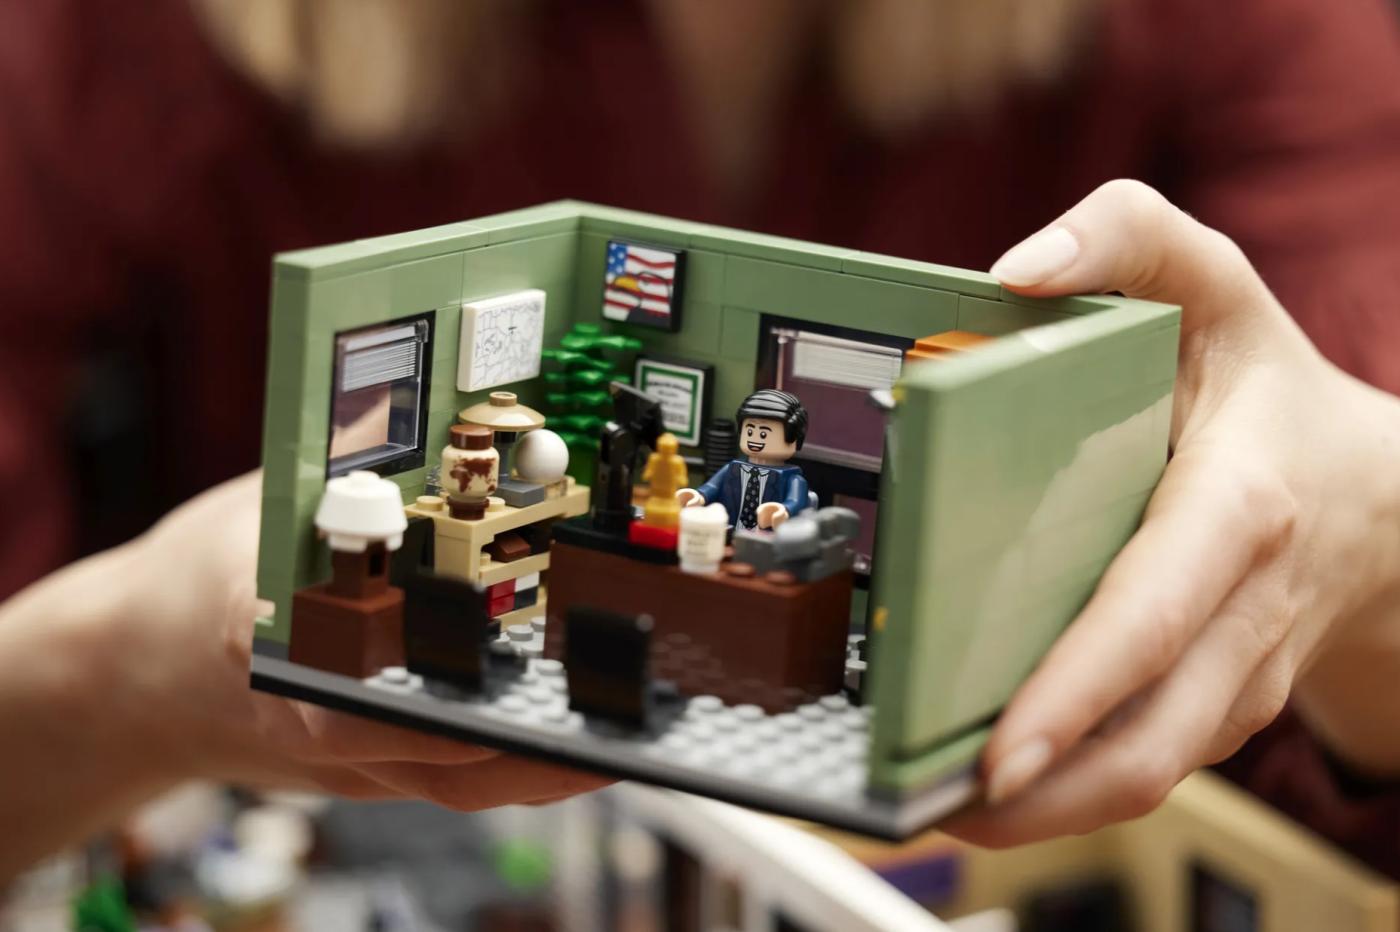 Lego The Office vue ensemble